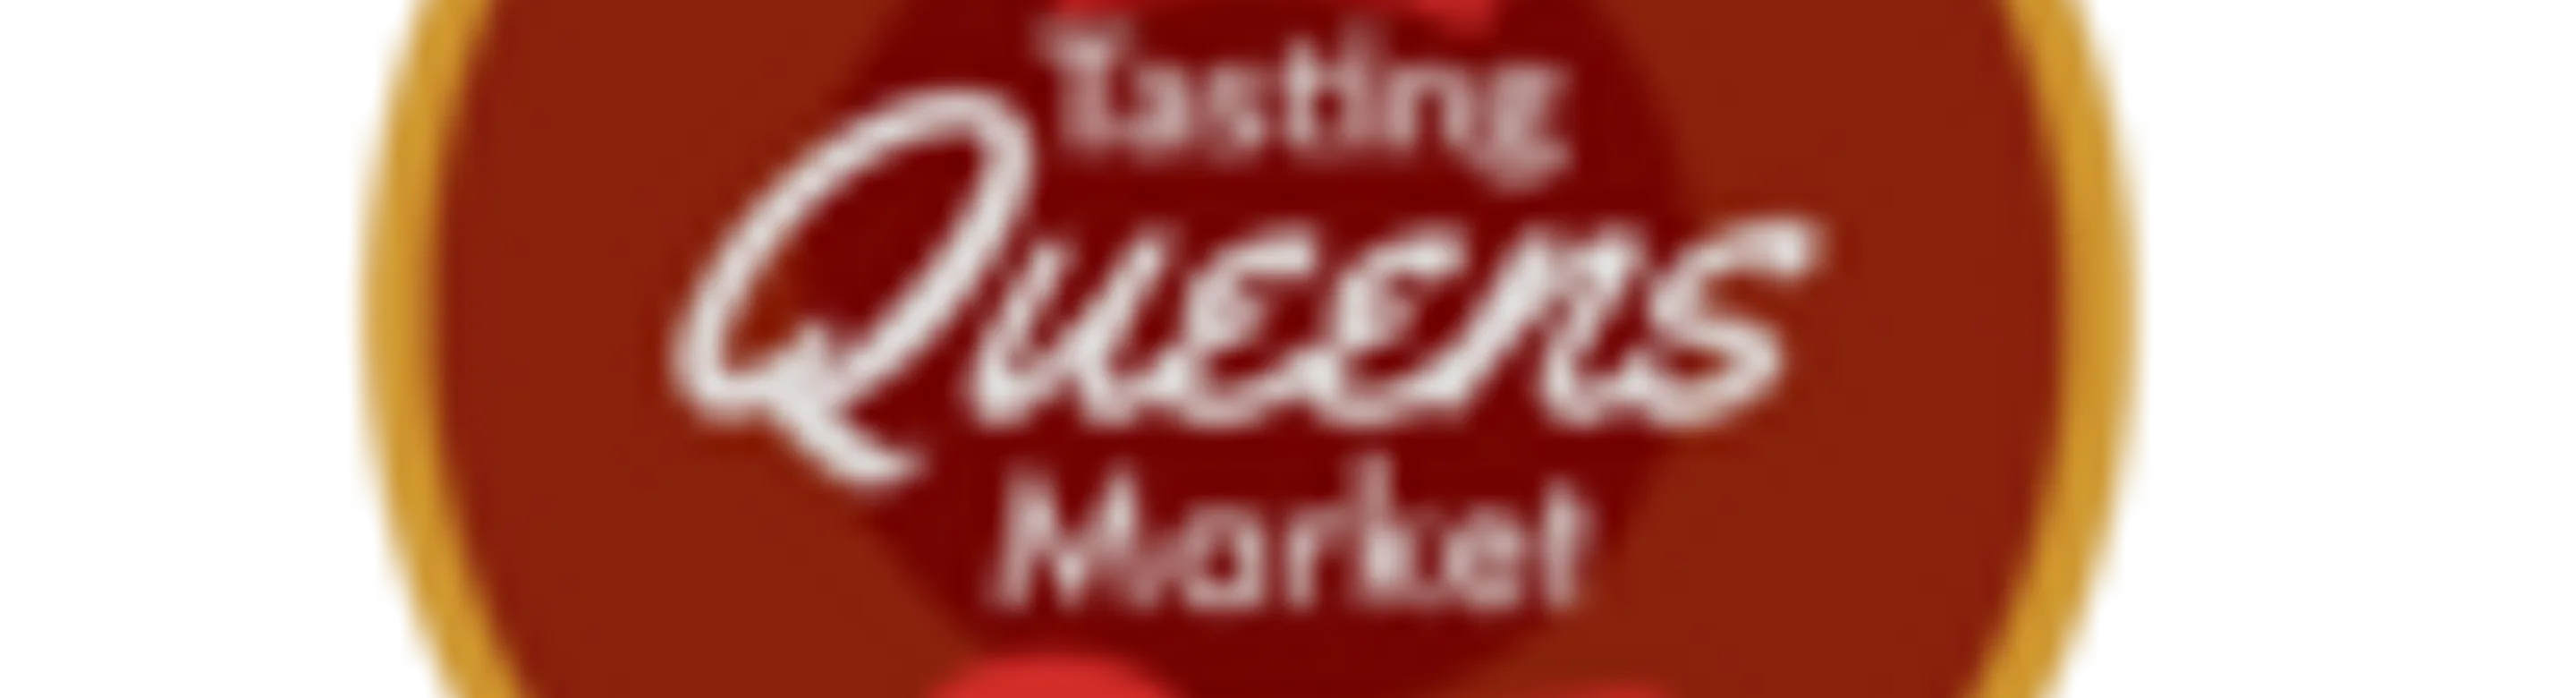 Tasting Queens Market